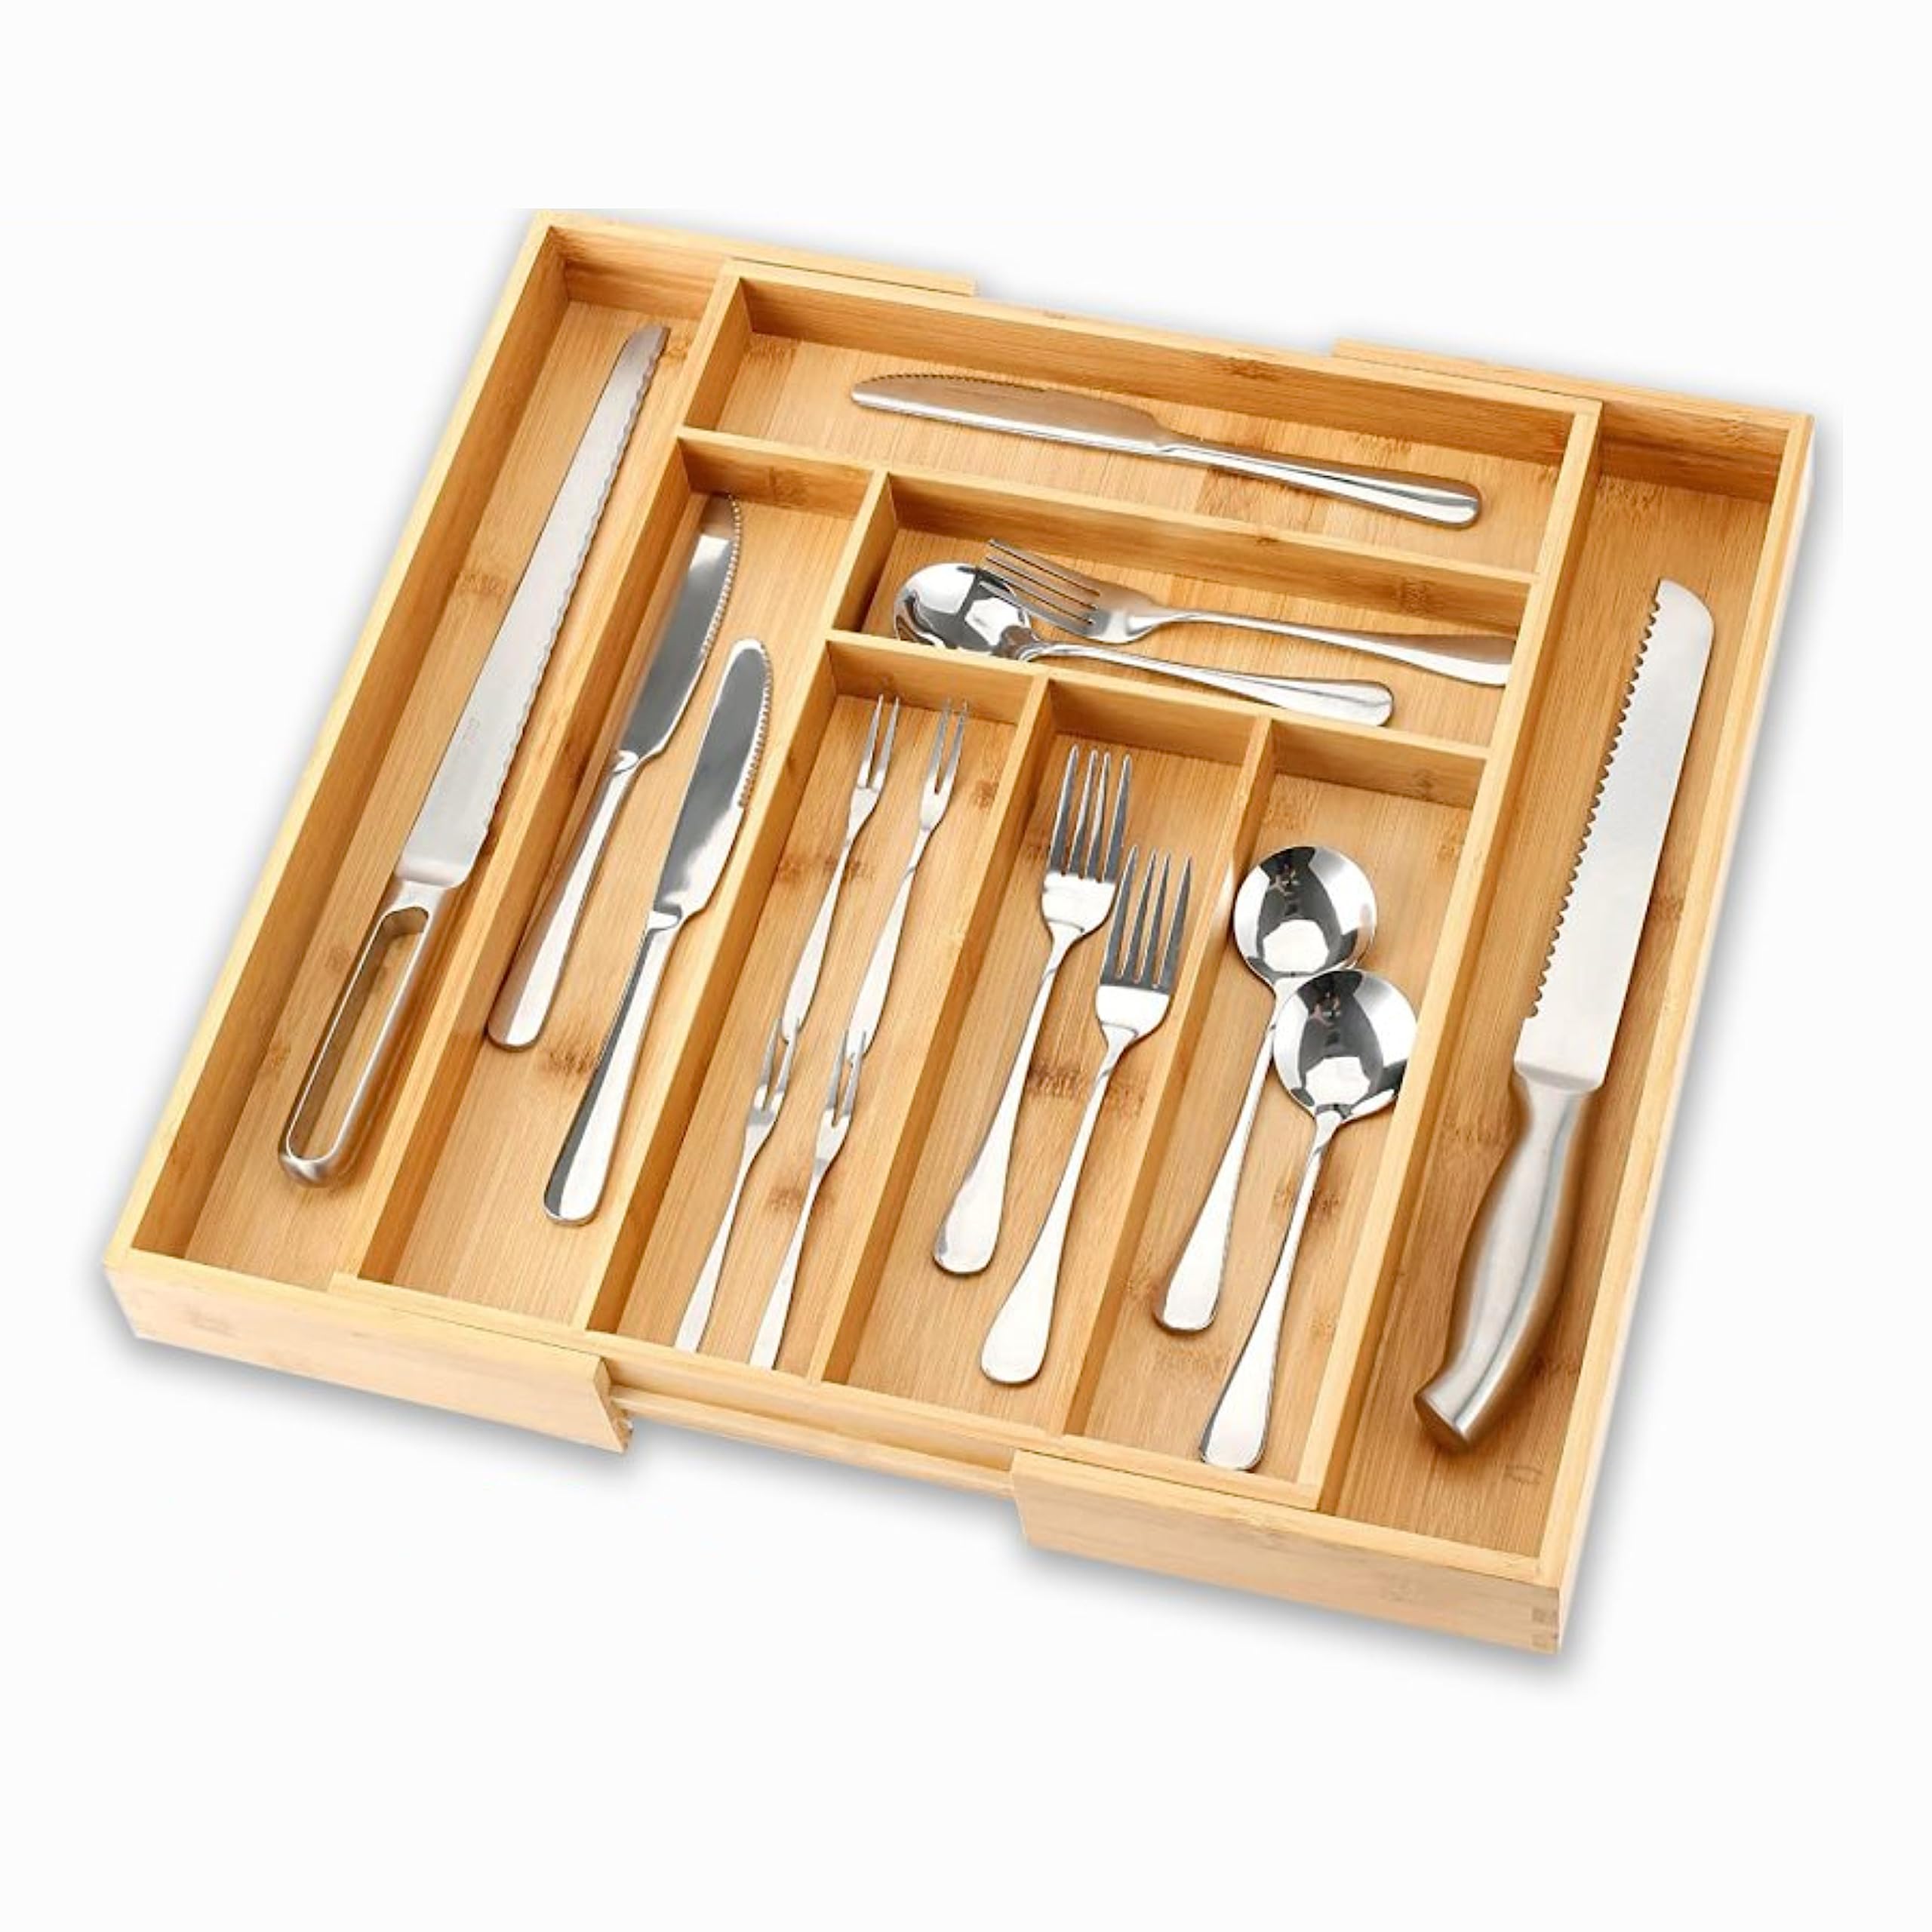 XYMiJiaLe Kitchen Drawer Organizer, Bamboo Drawer Organizer, silverware organizer, Kitchen Utensil Organizer, utensil organizer, flatware tray, expandable drawer organizer(6-8 slots)